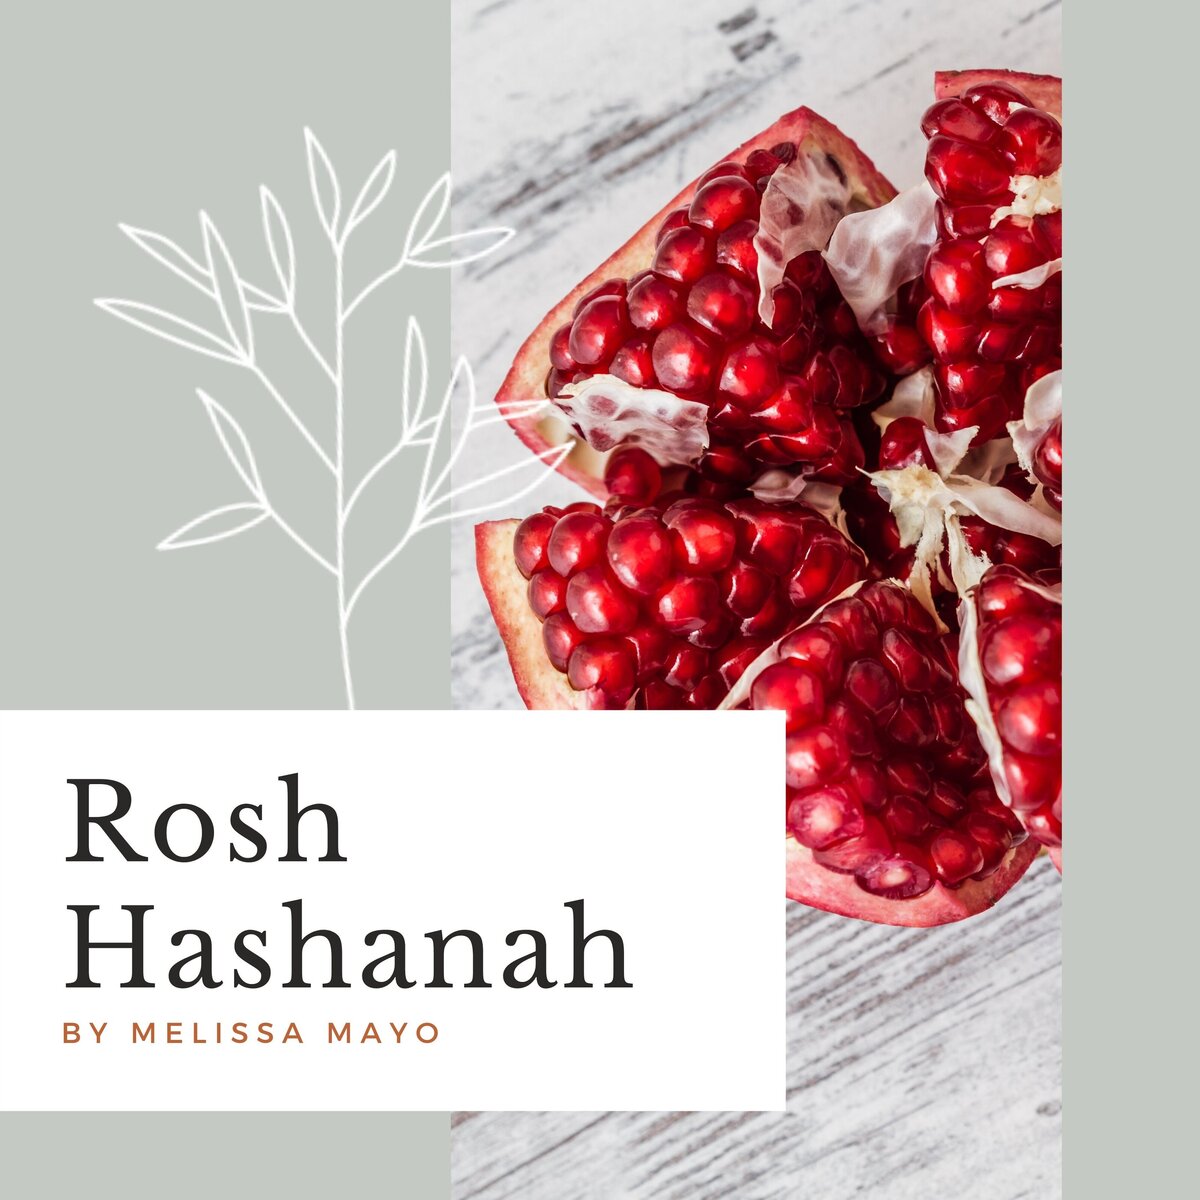 rosh-ha-shana-cookbook-melissa-mayo